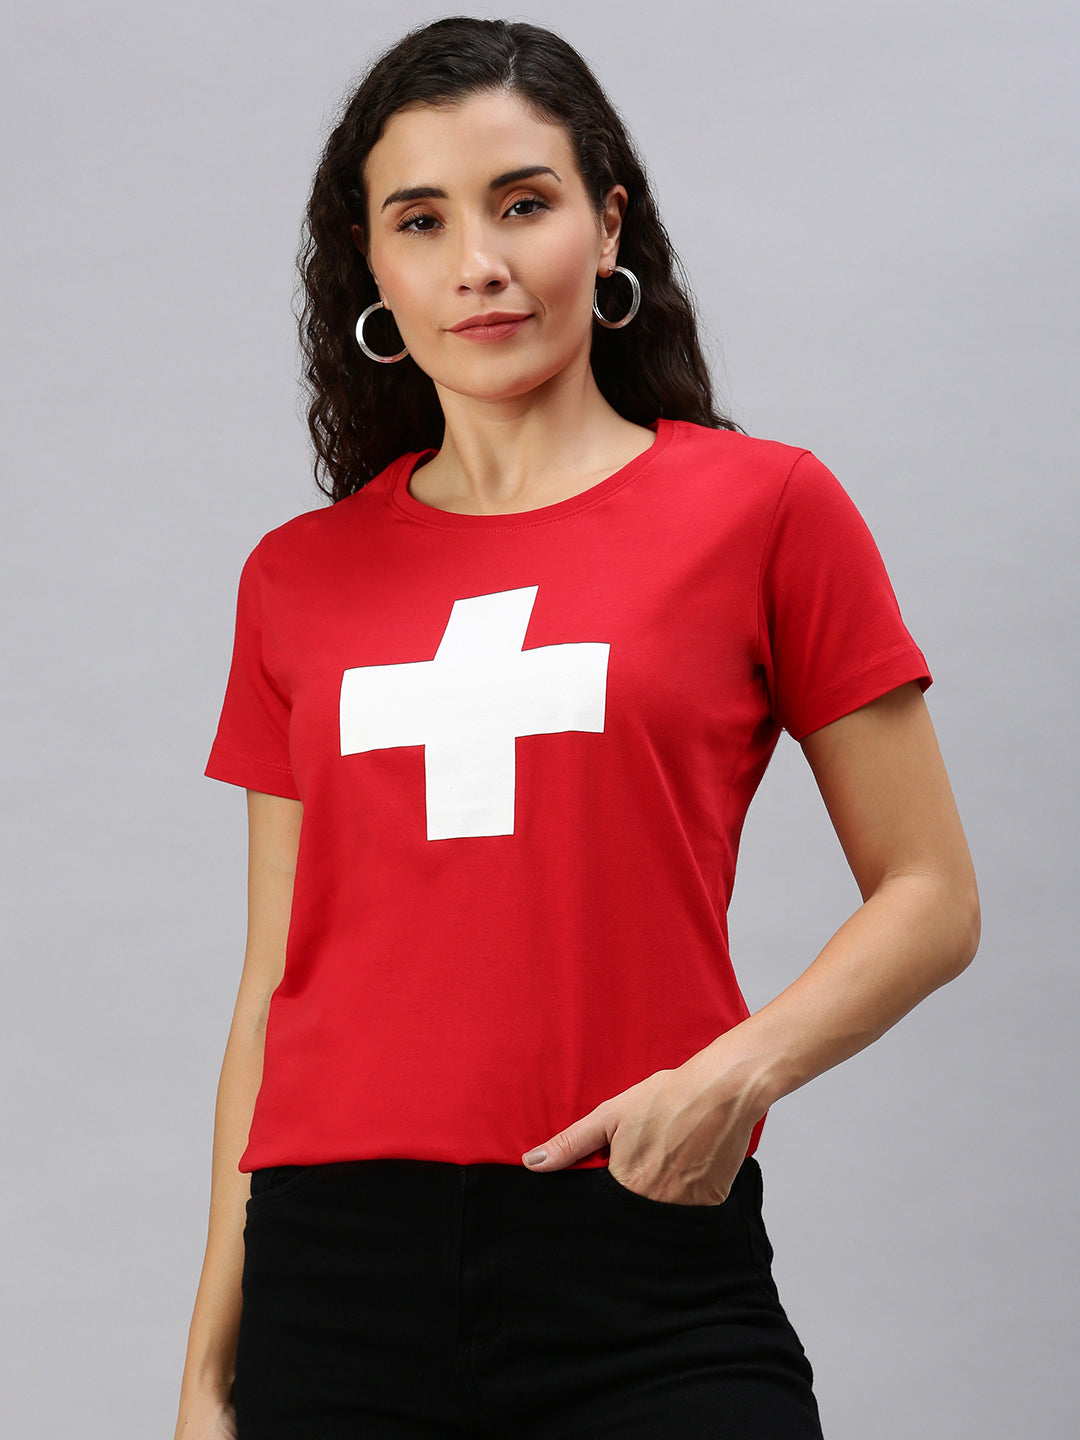 Helvetica T-Shirt Damen V-Neck 2035